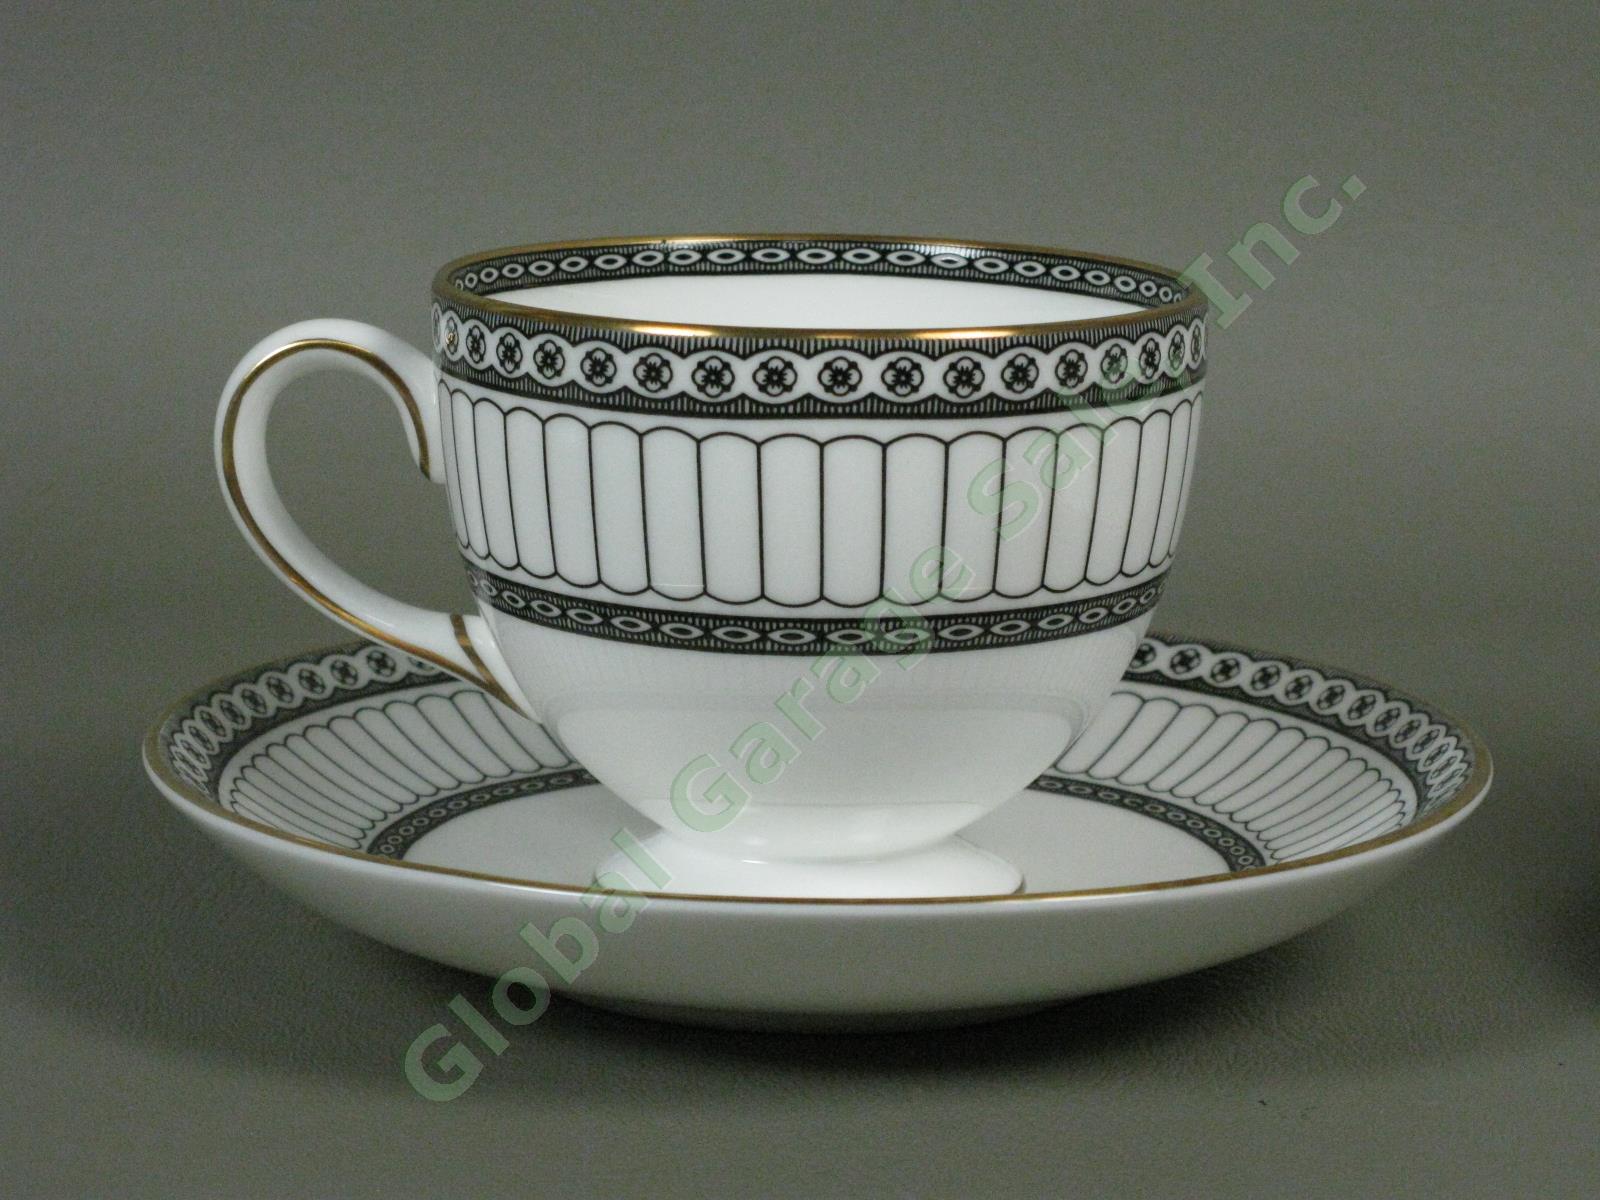 4 RARE Wedgwood Colonnade Black England Bone China Footed Tea Cup Saucer Sets NR 3